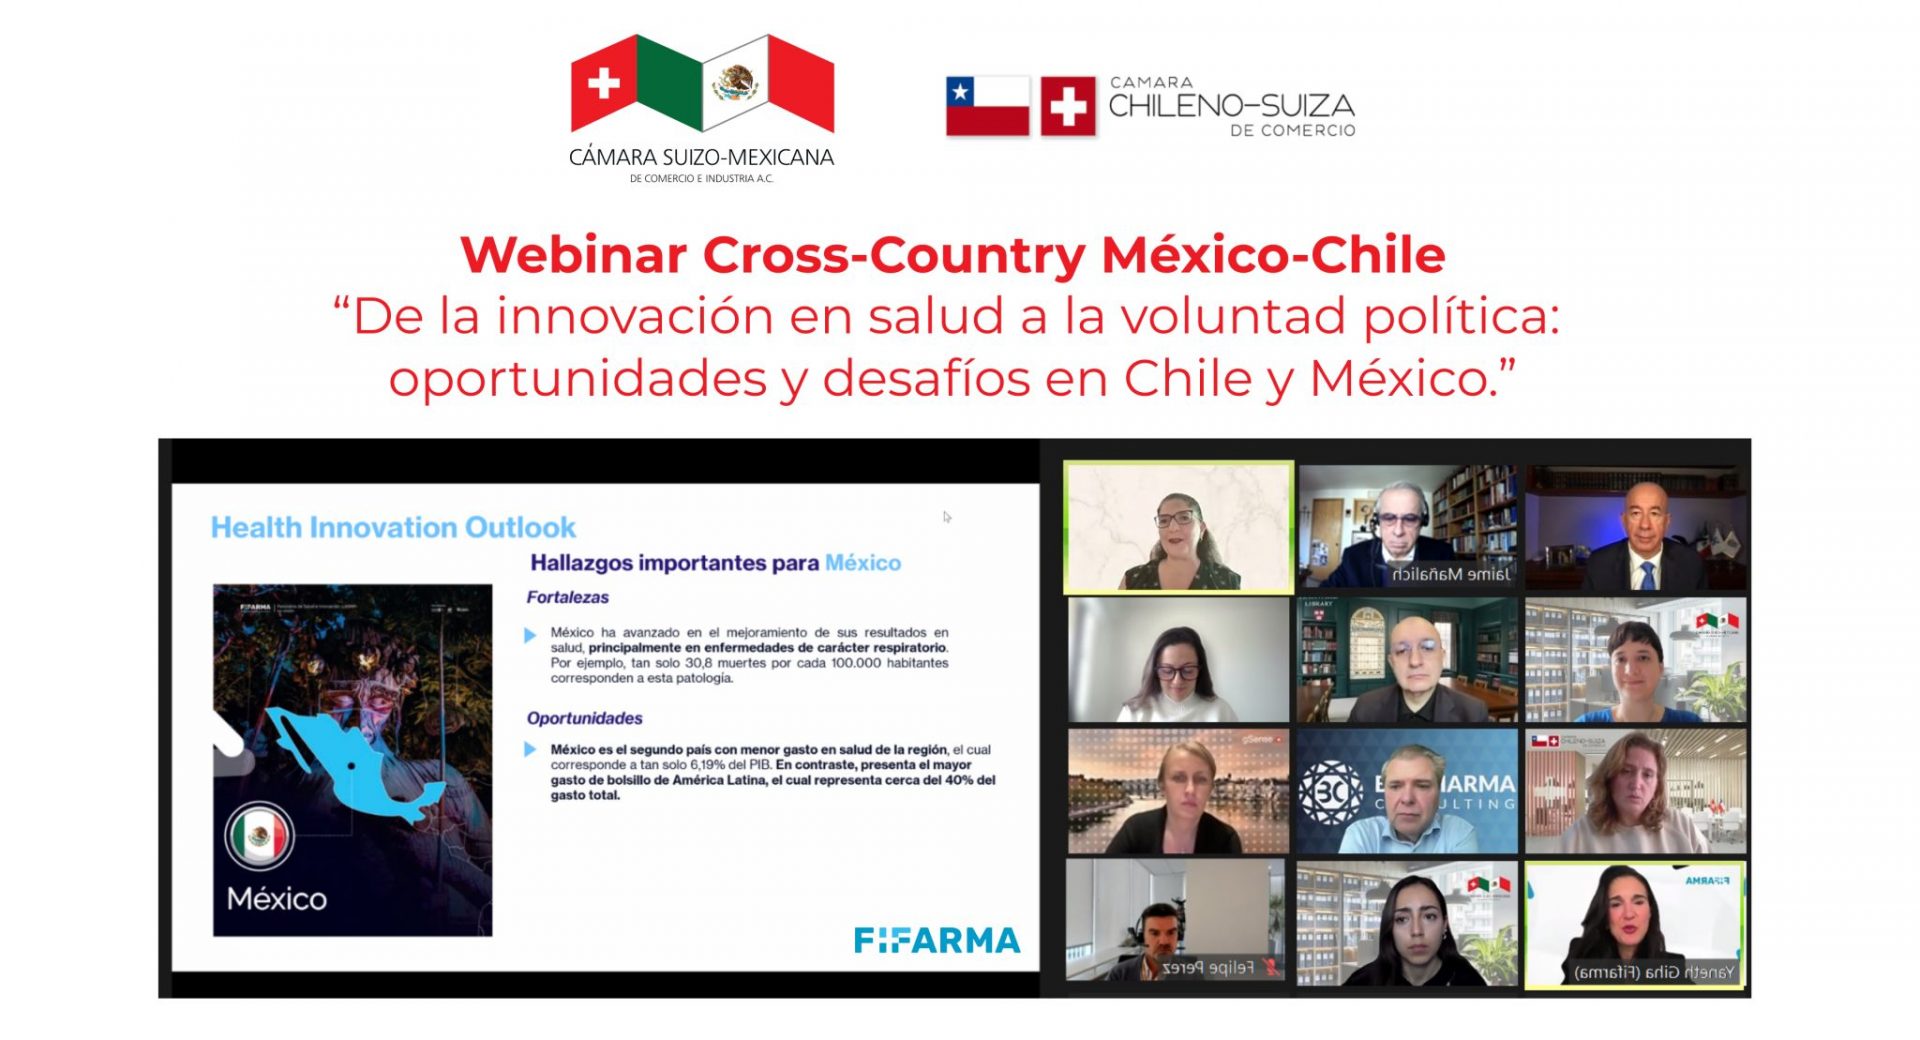 Webinar Cross-Country México-Chile en Salud